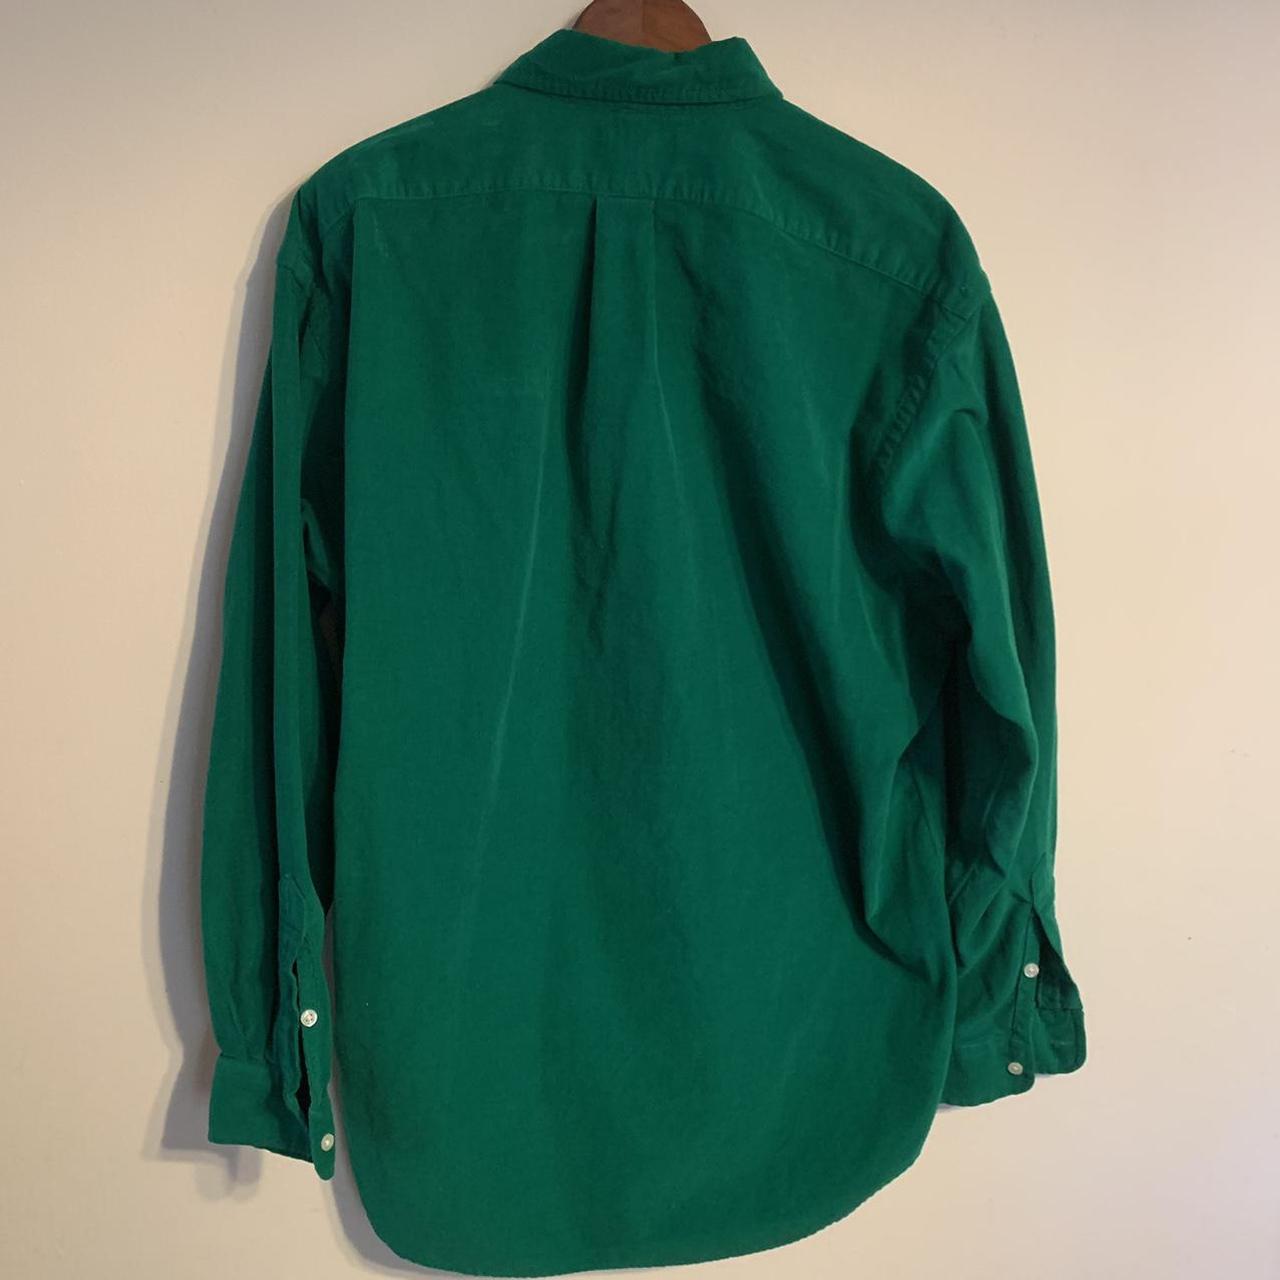 Product Image 2 - Emerald green Ralph Lauren Polo